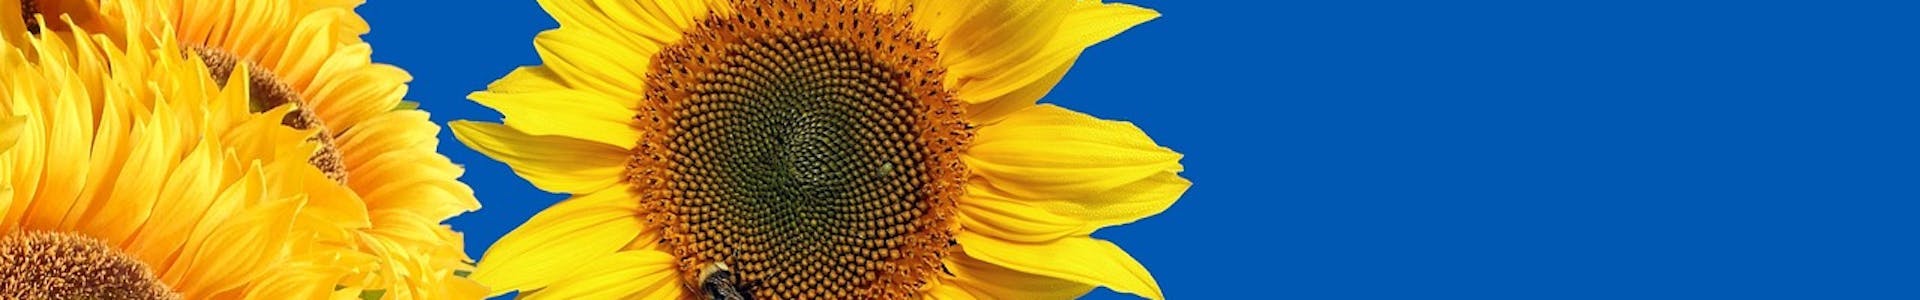 Sunflowers - case study